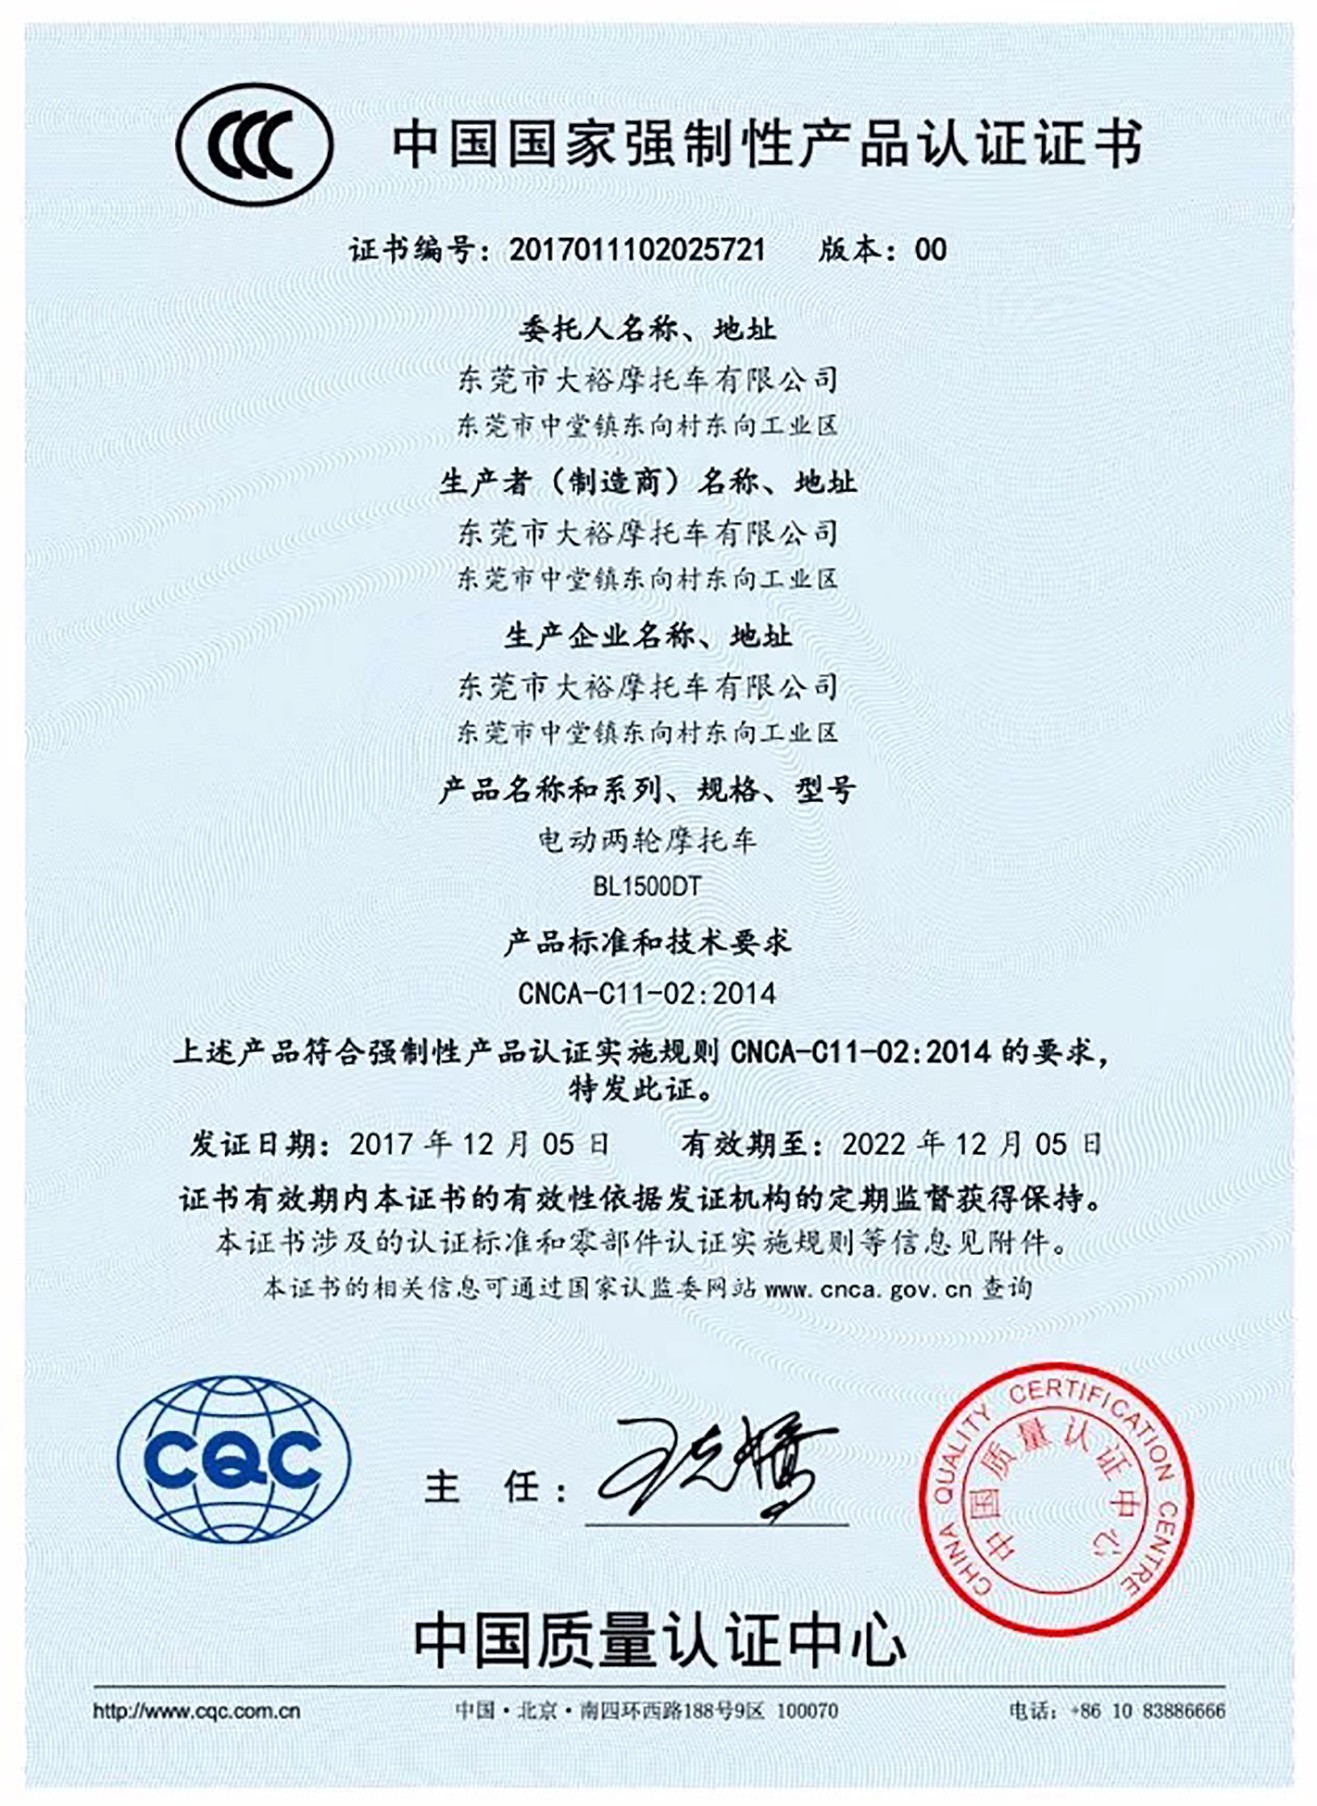 شهادة CCC